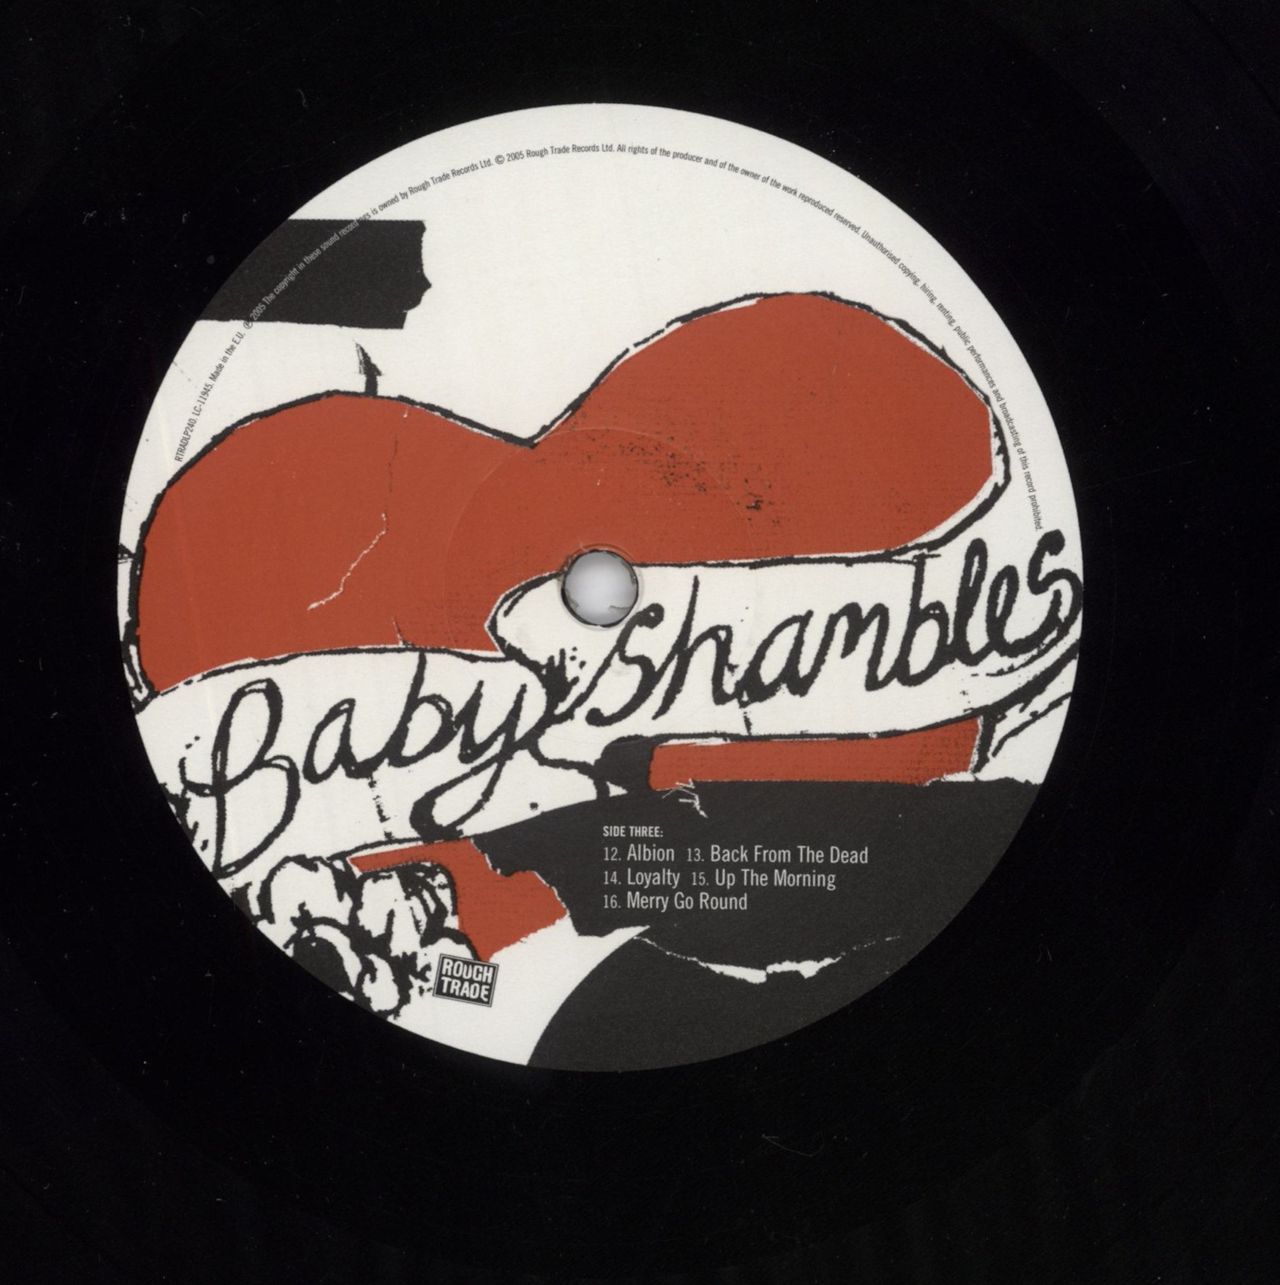 Morning16 Xxx Videos - Babyshambles Down In Albion UK 2-LP vinyl set â€” RareVinyl.com